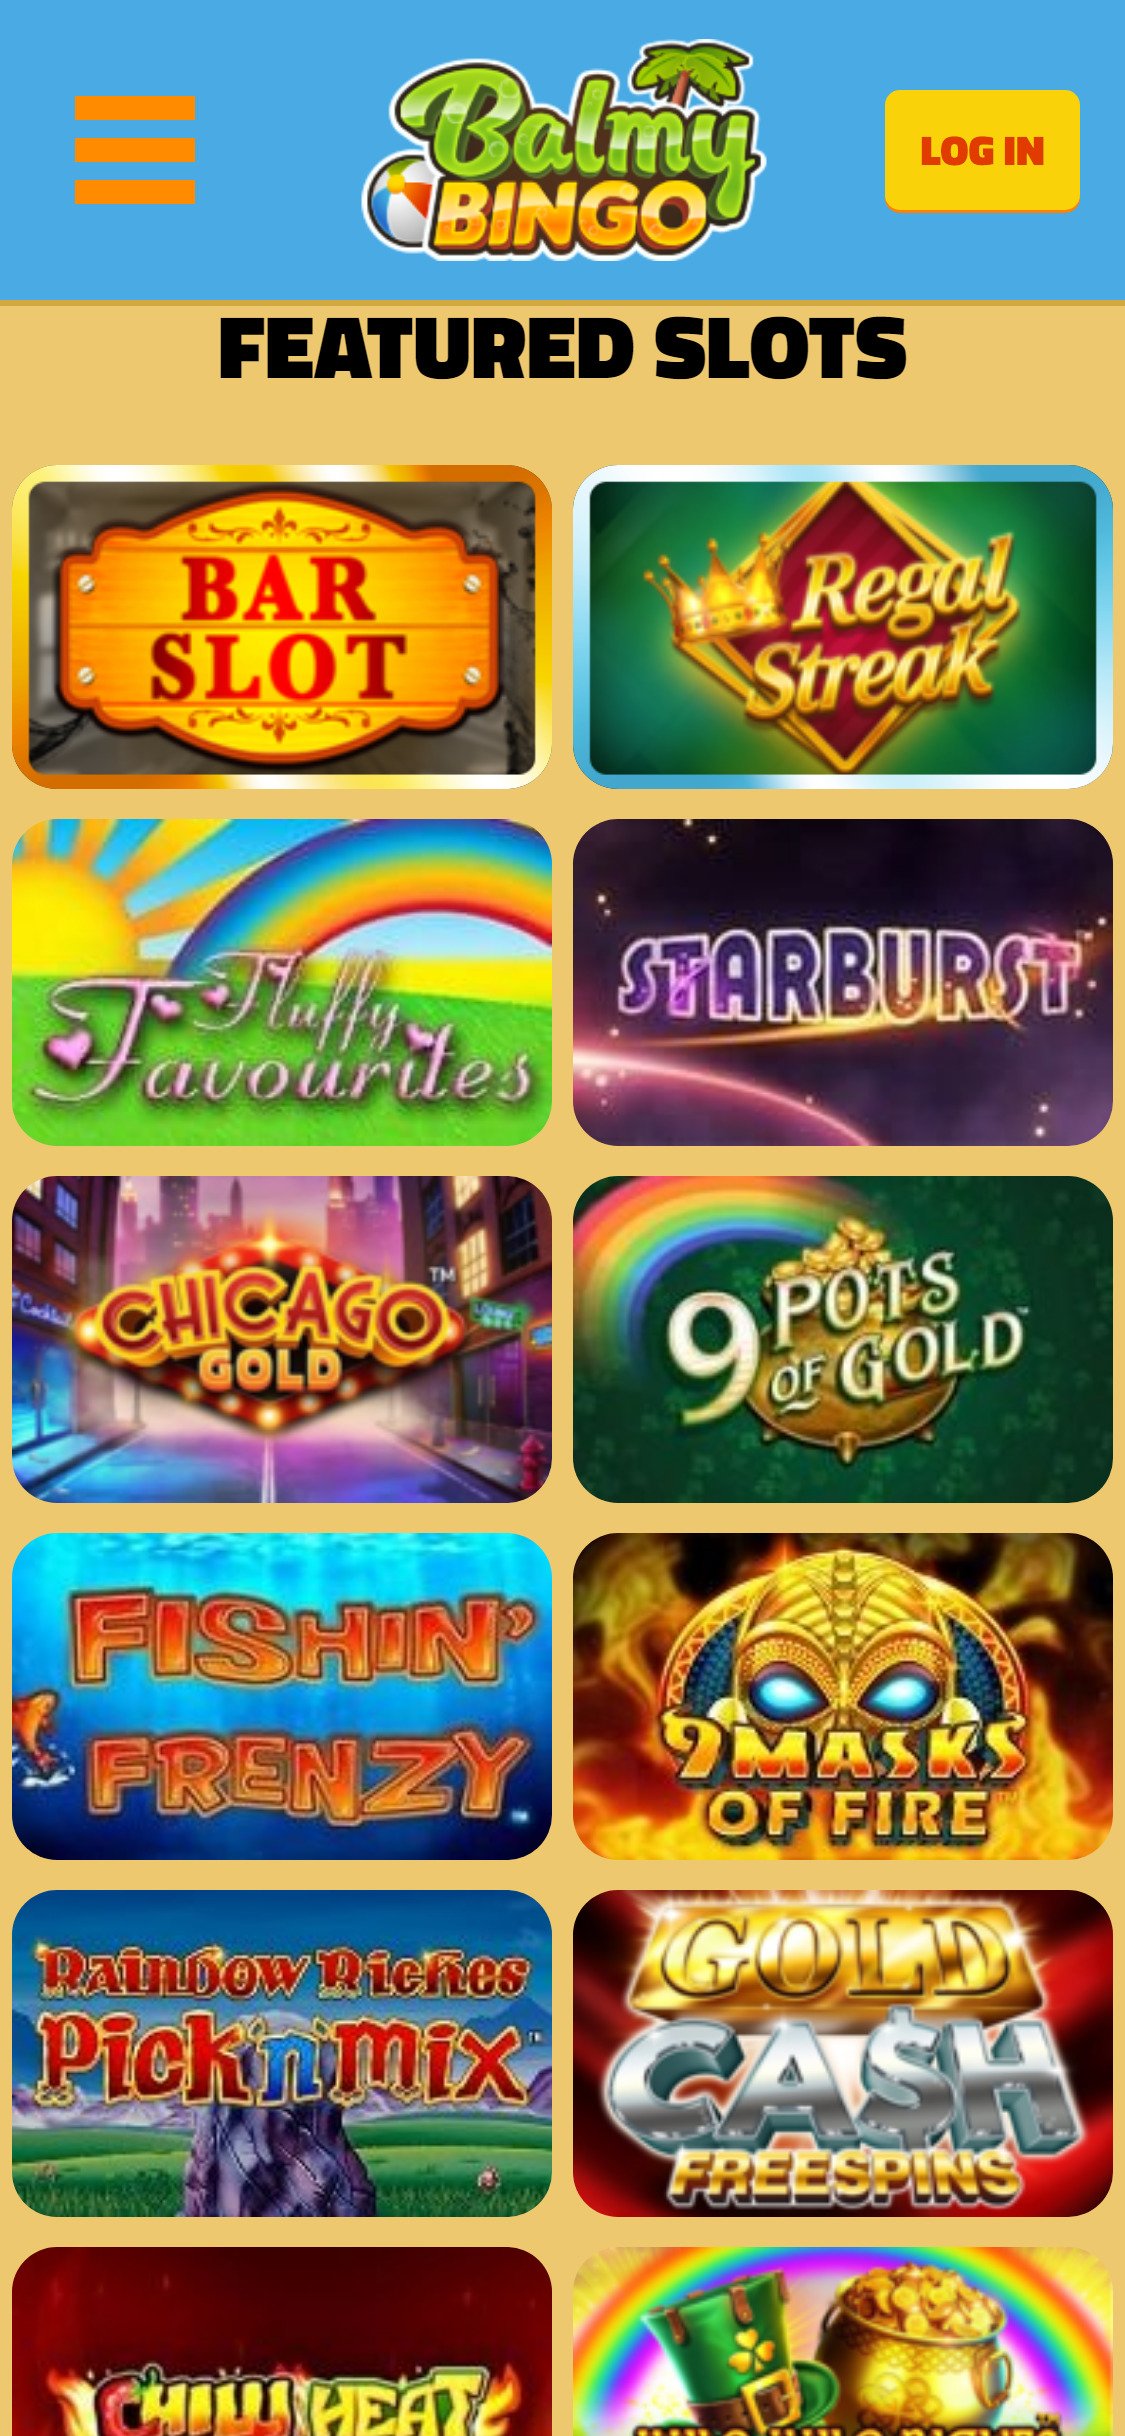 Balmy Bingo Casino Mobile Games Review